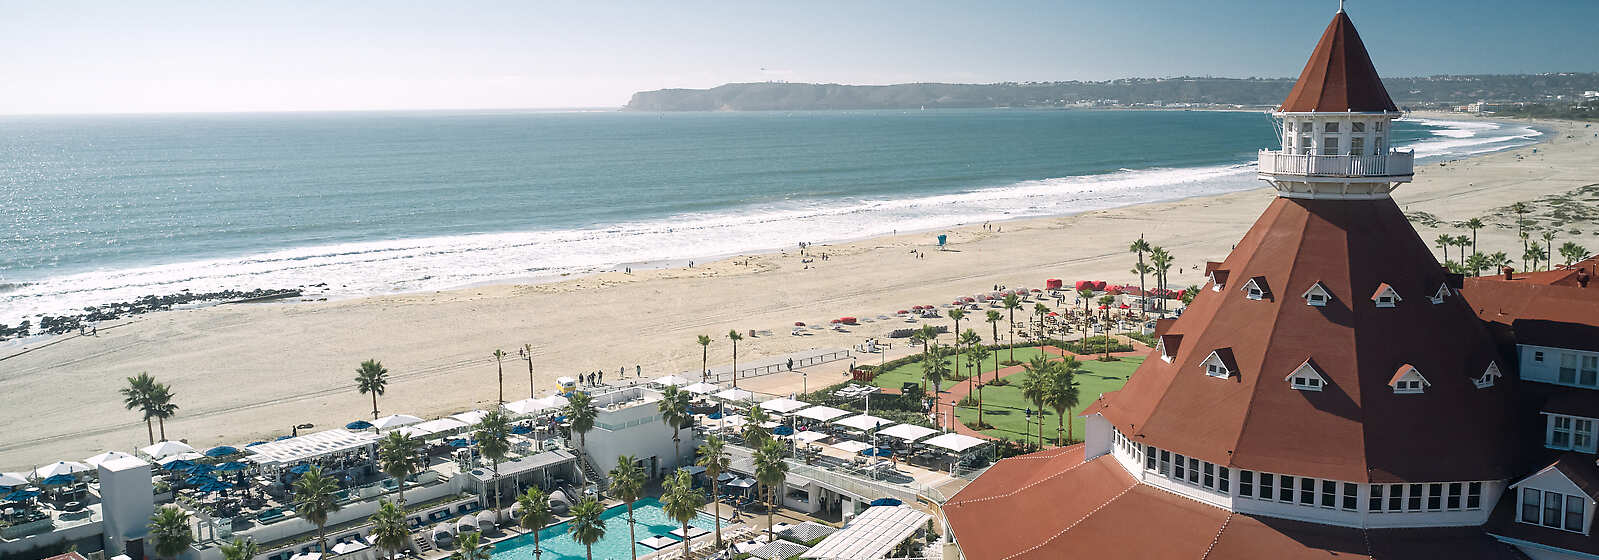 Hotel del Coronado's famous red turret, new Cabana Pool and beach. 